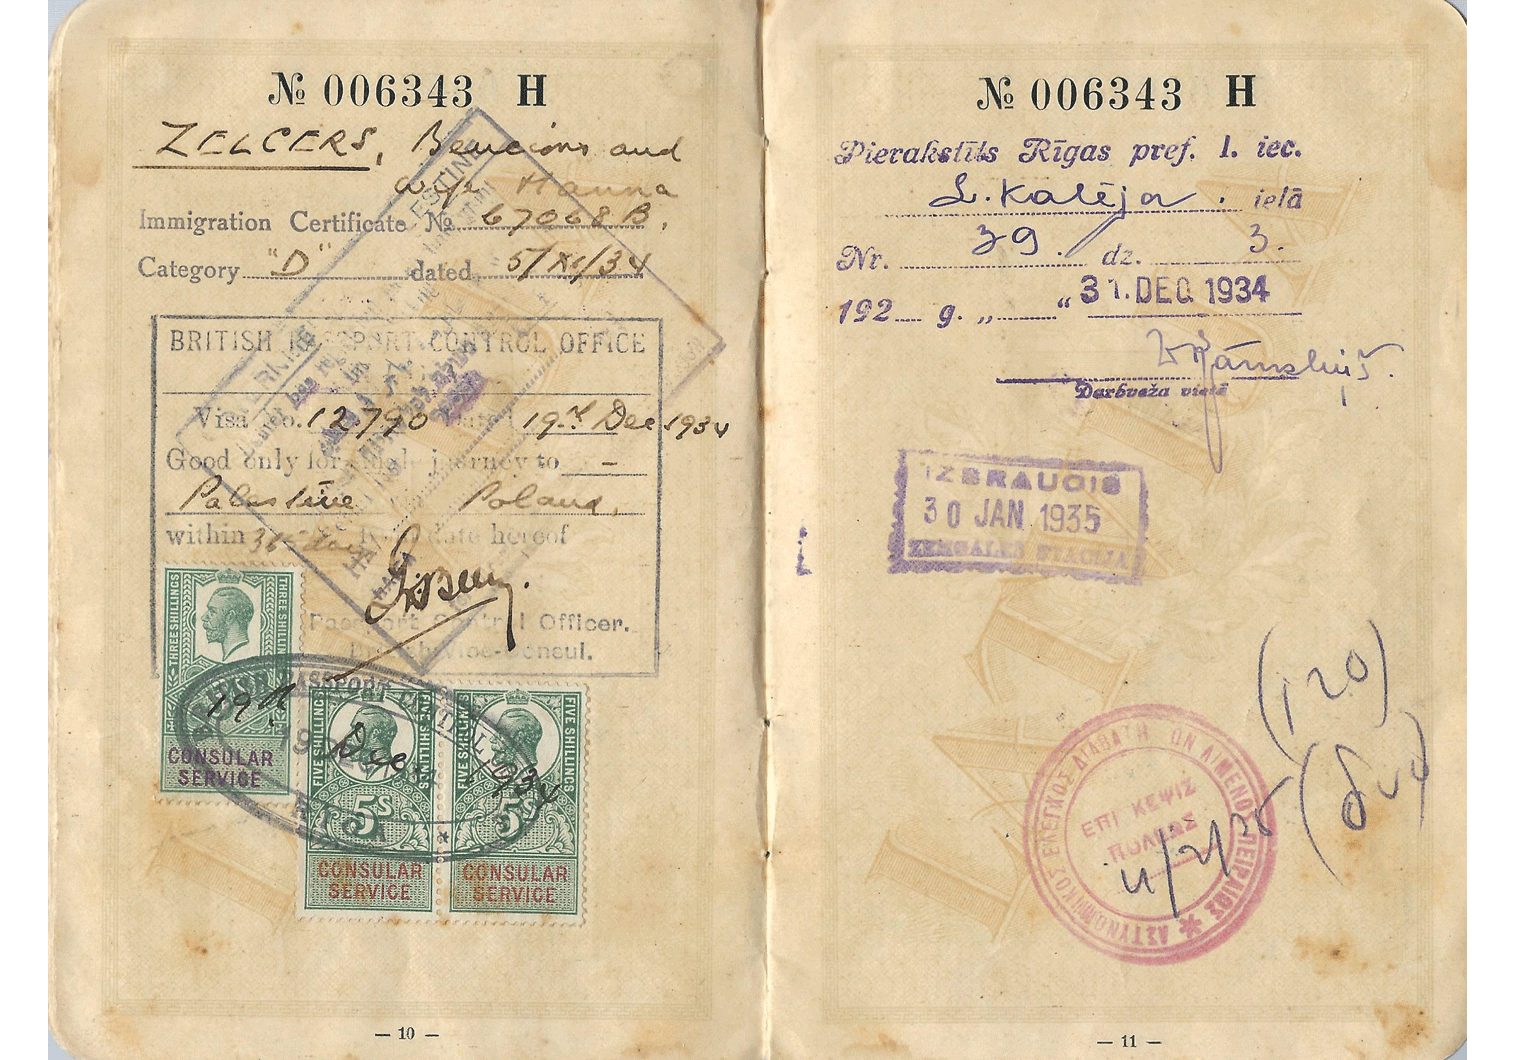 1934 Latvian passport for the Mandate